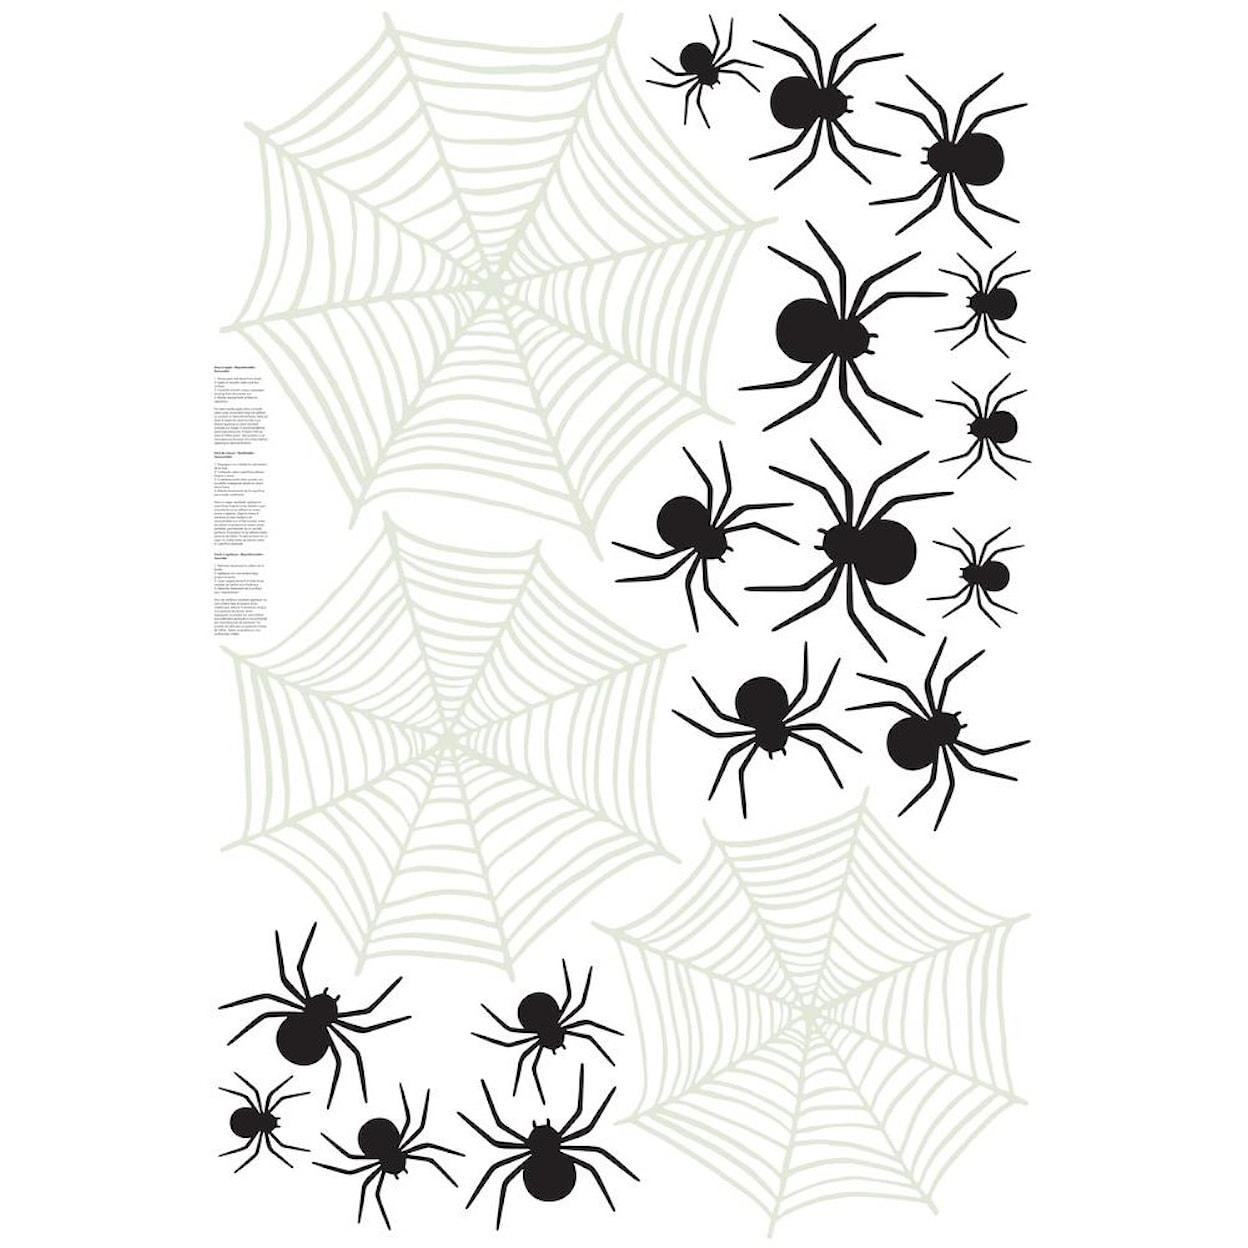 Tempaper Wall Decals Spider Webs